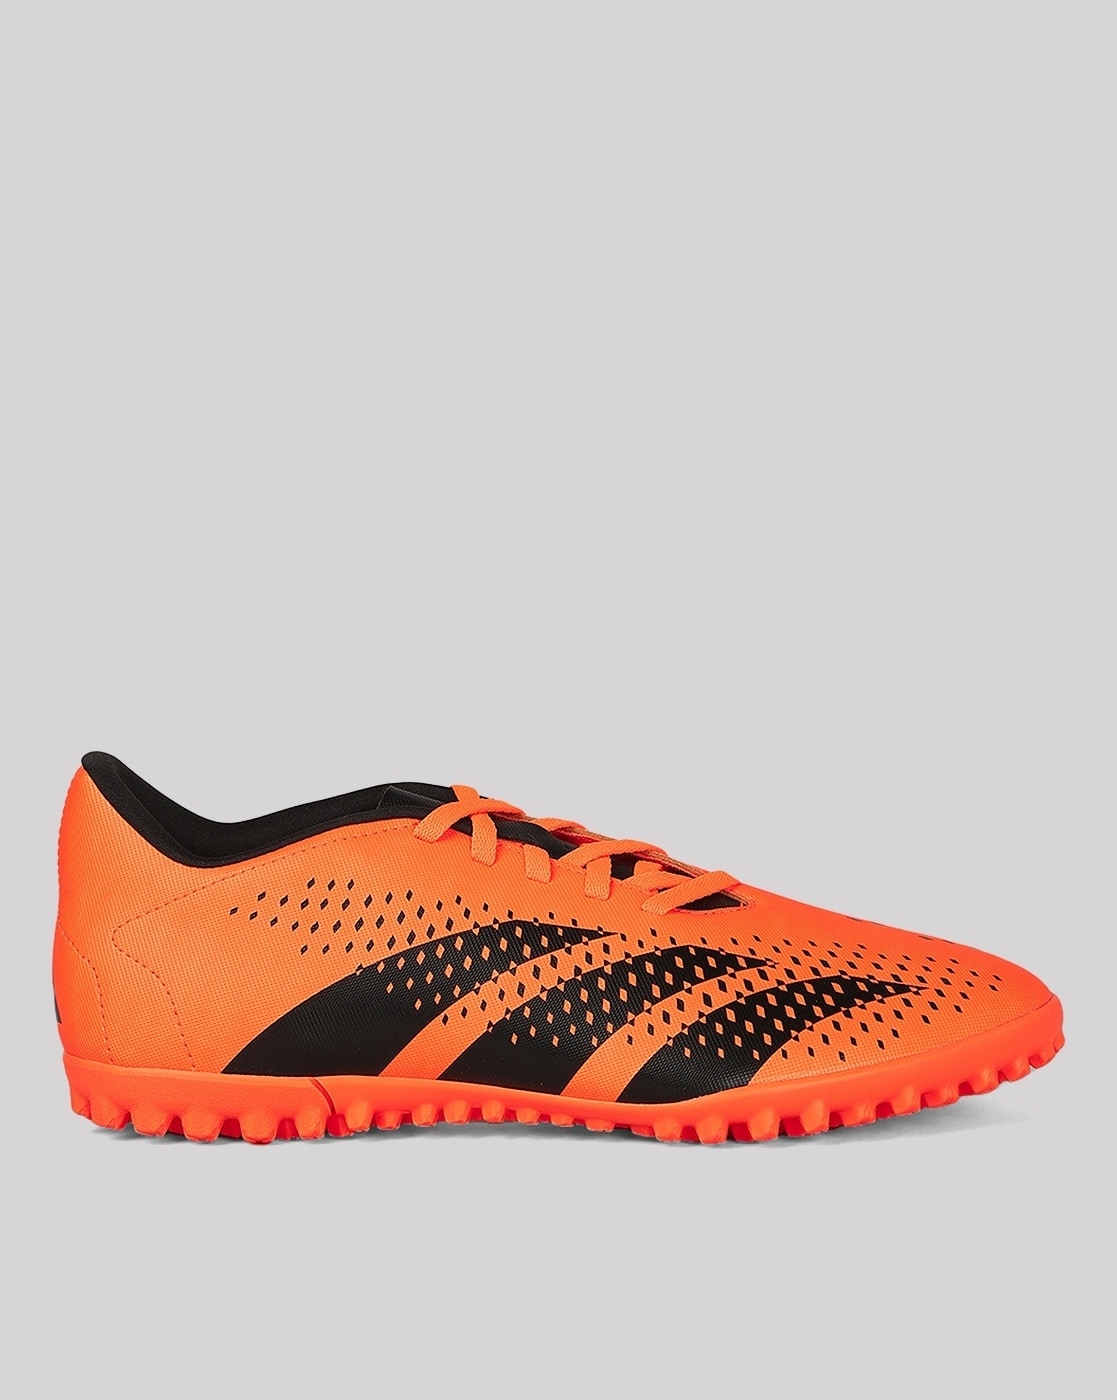 Predator Football Boots  Shop adidas Predator Football Shoes Online